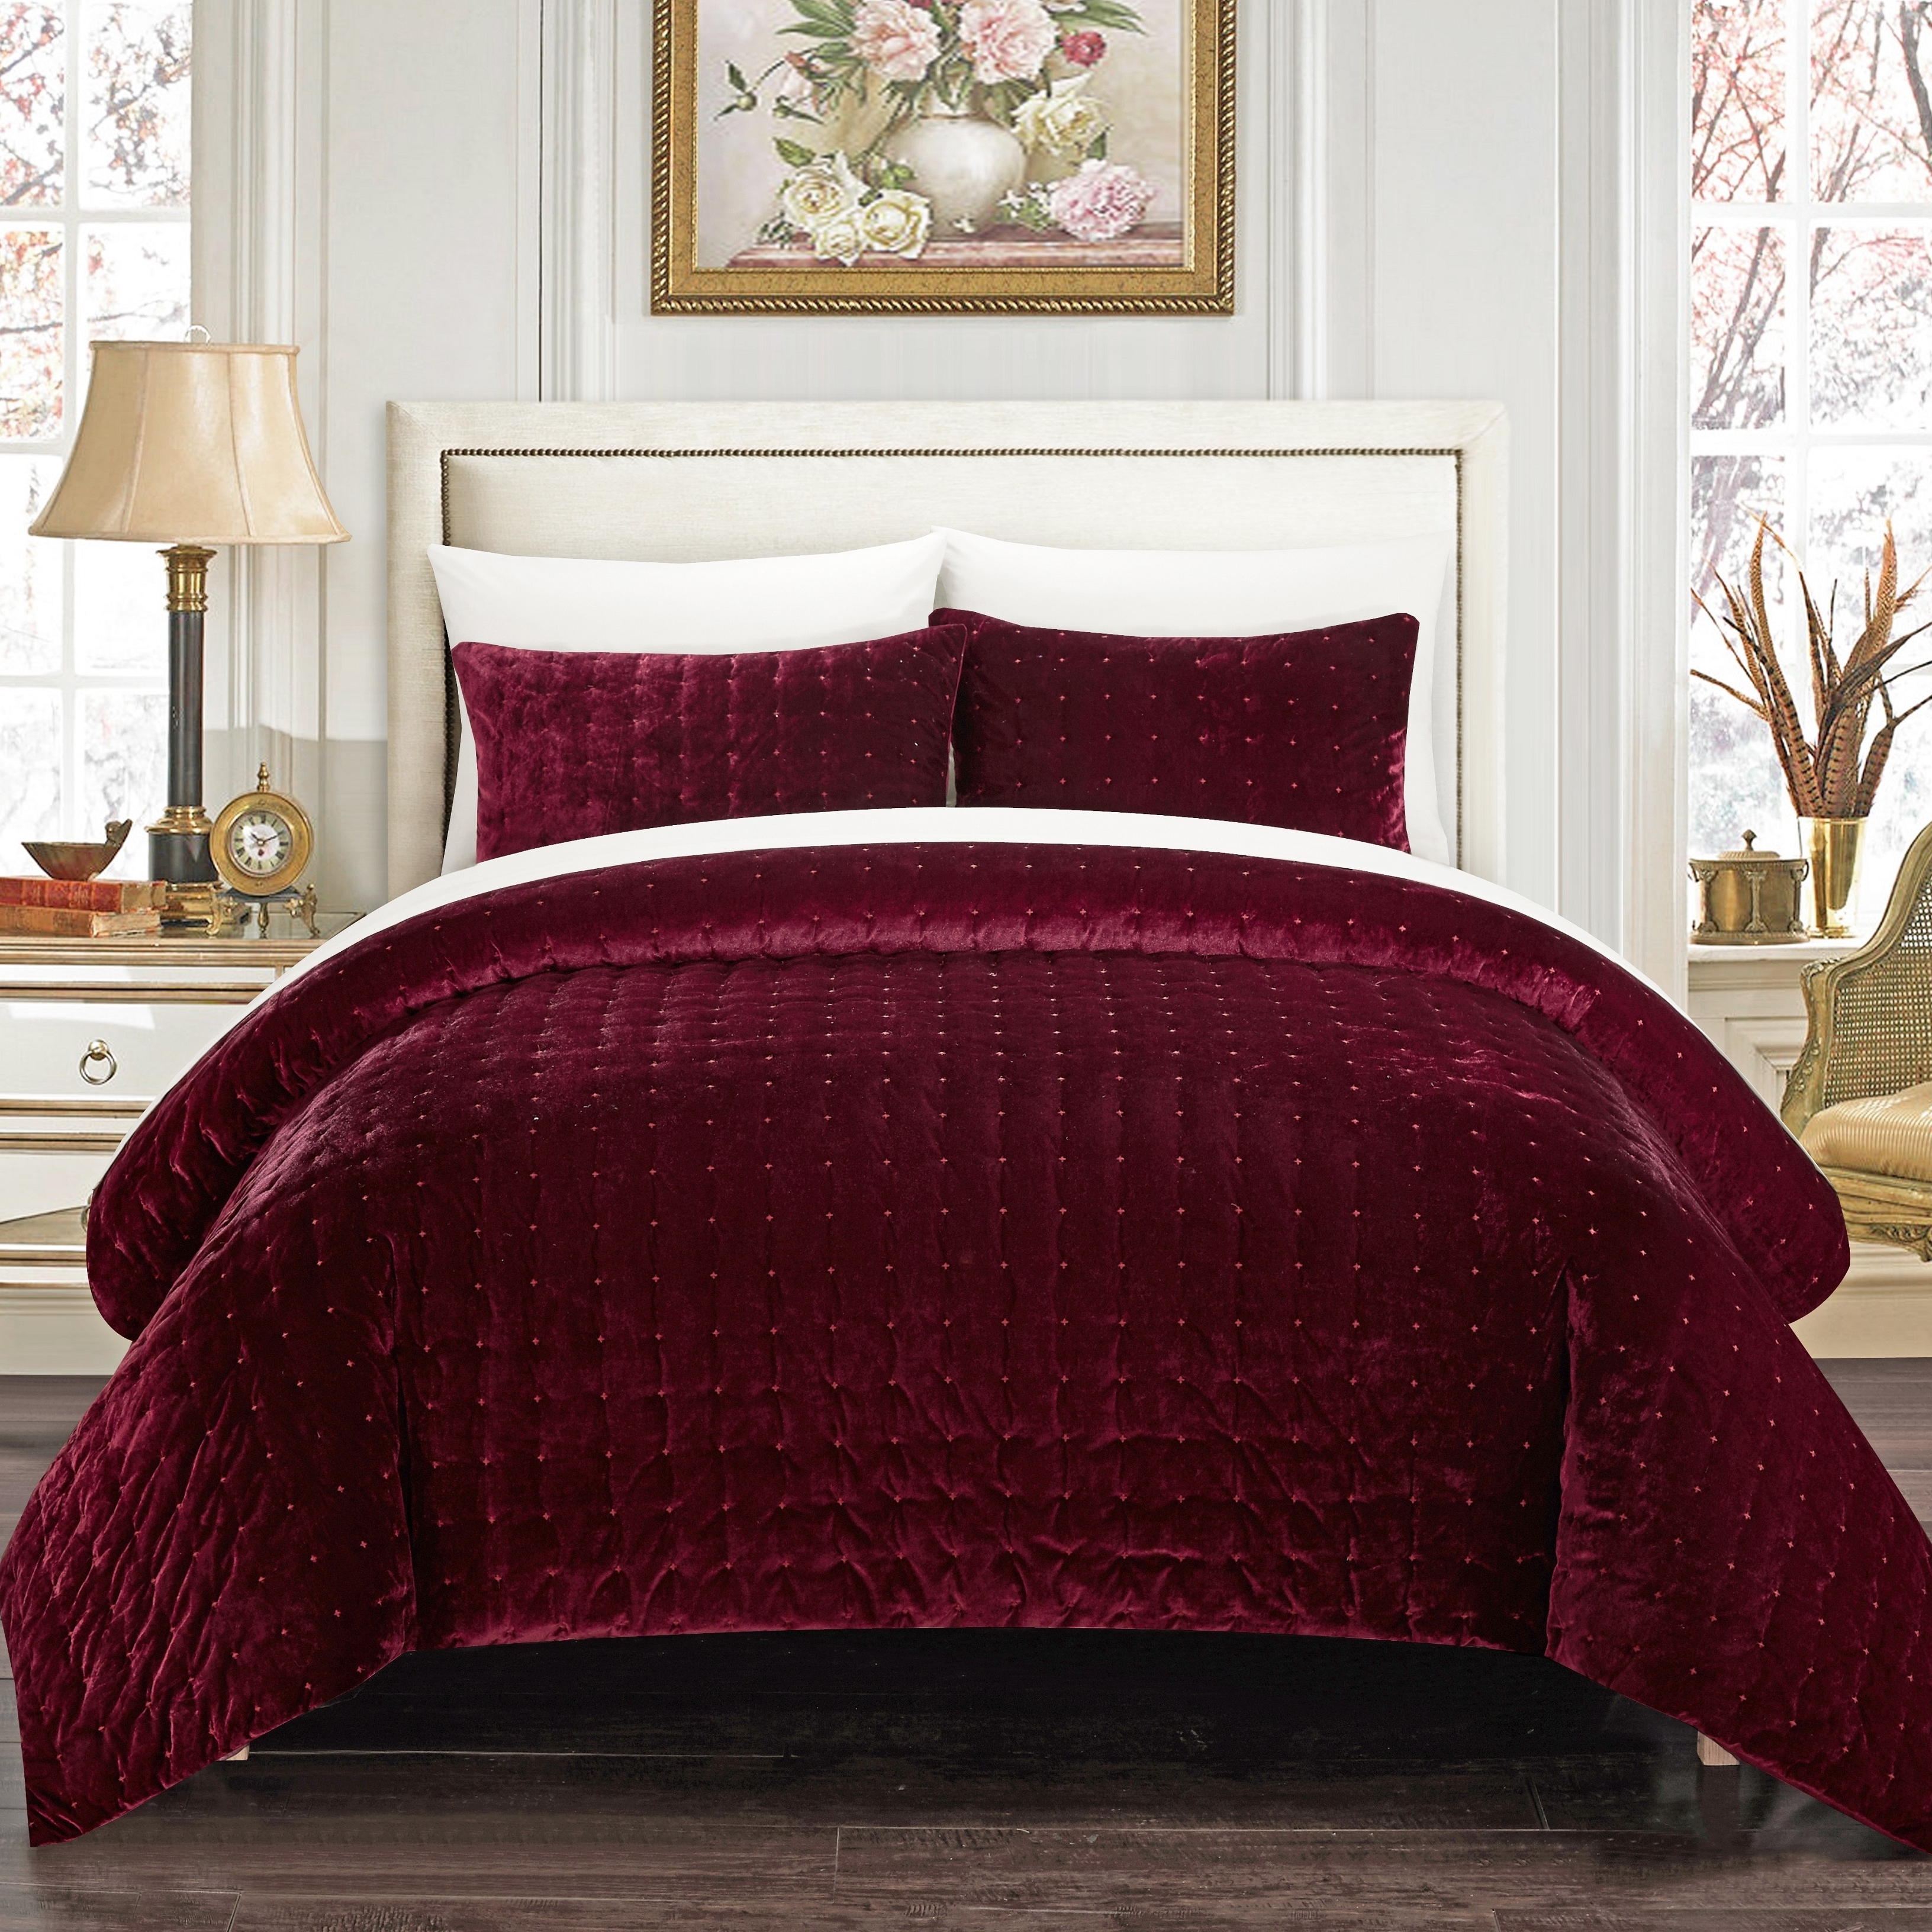 Chyna 3 Piece Comforter Set Luxurious Velvet Bedding - Burgundy, King